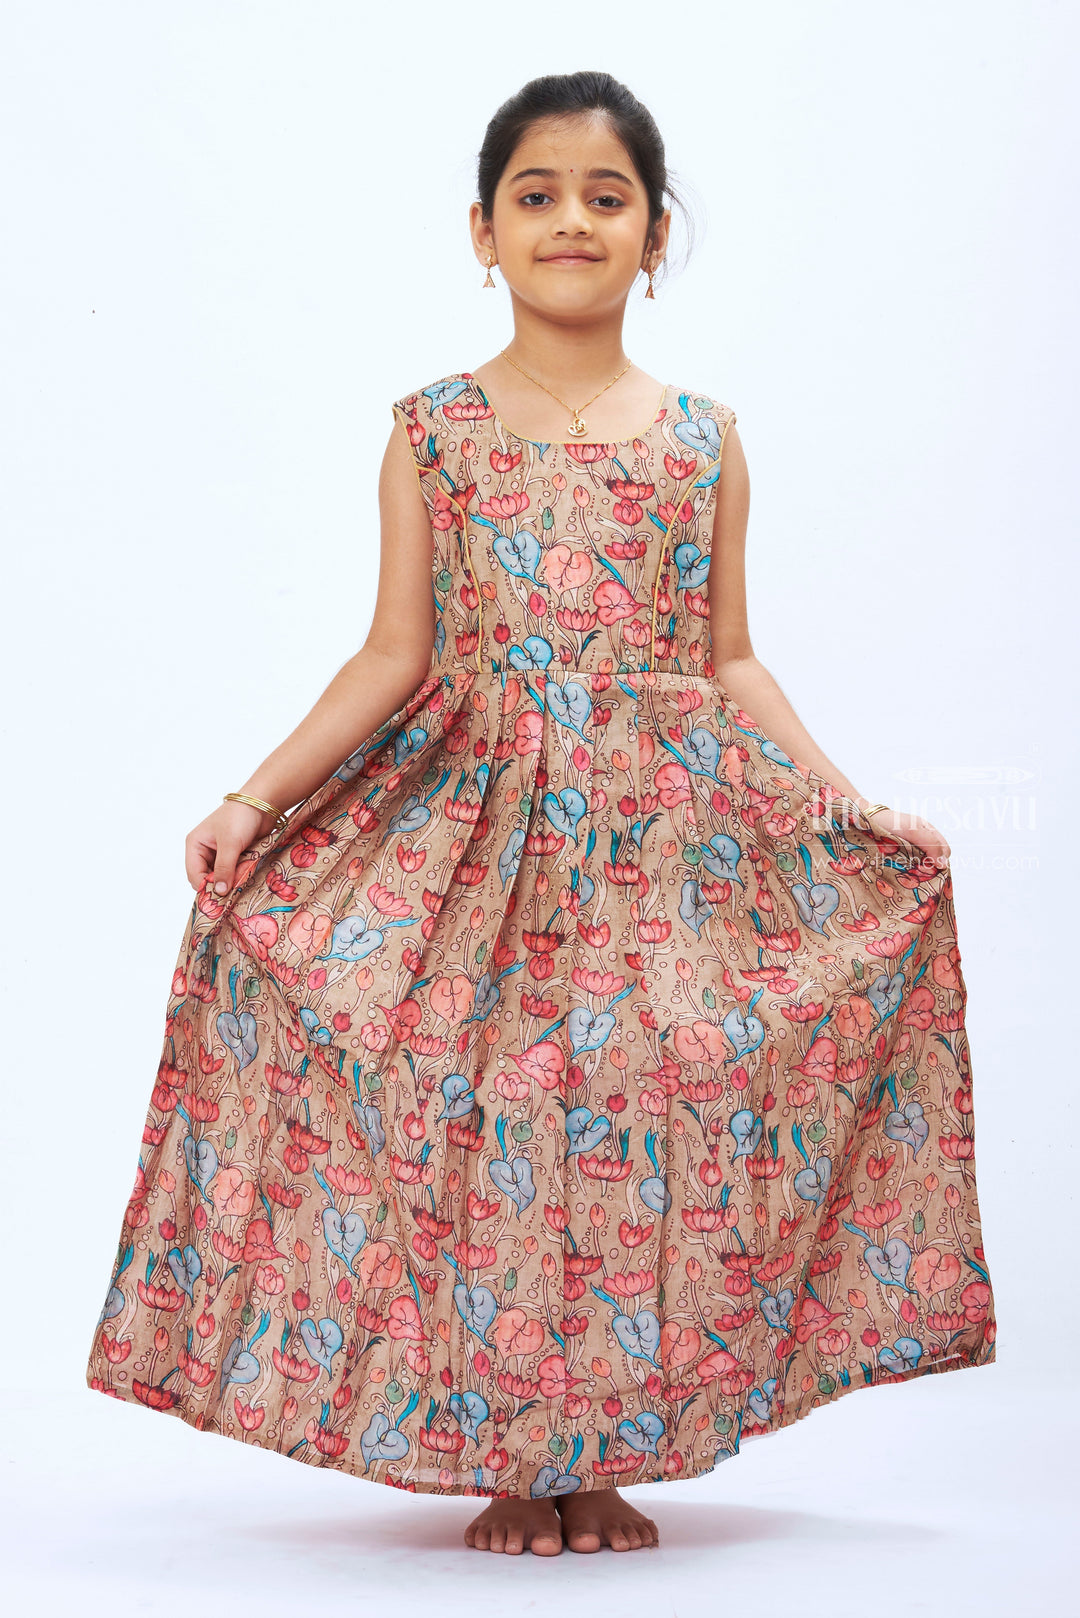 The Nesavu Girls Silk Gown Whimsical Blooms: Beige Anarkali Gown with Kalamkari Prints & Peach Overcoat Nesavu Beige Kalamkari Printed Anarkali | Peach Overcoat Fusion | Full length gown for Girls | The Nesavu